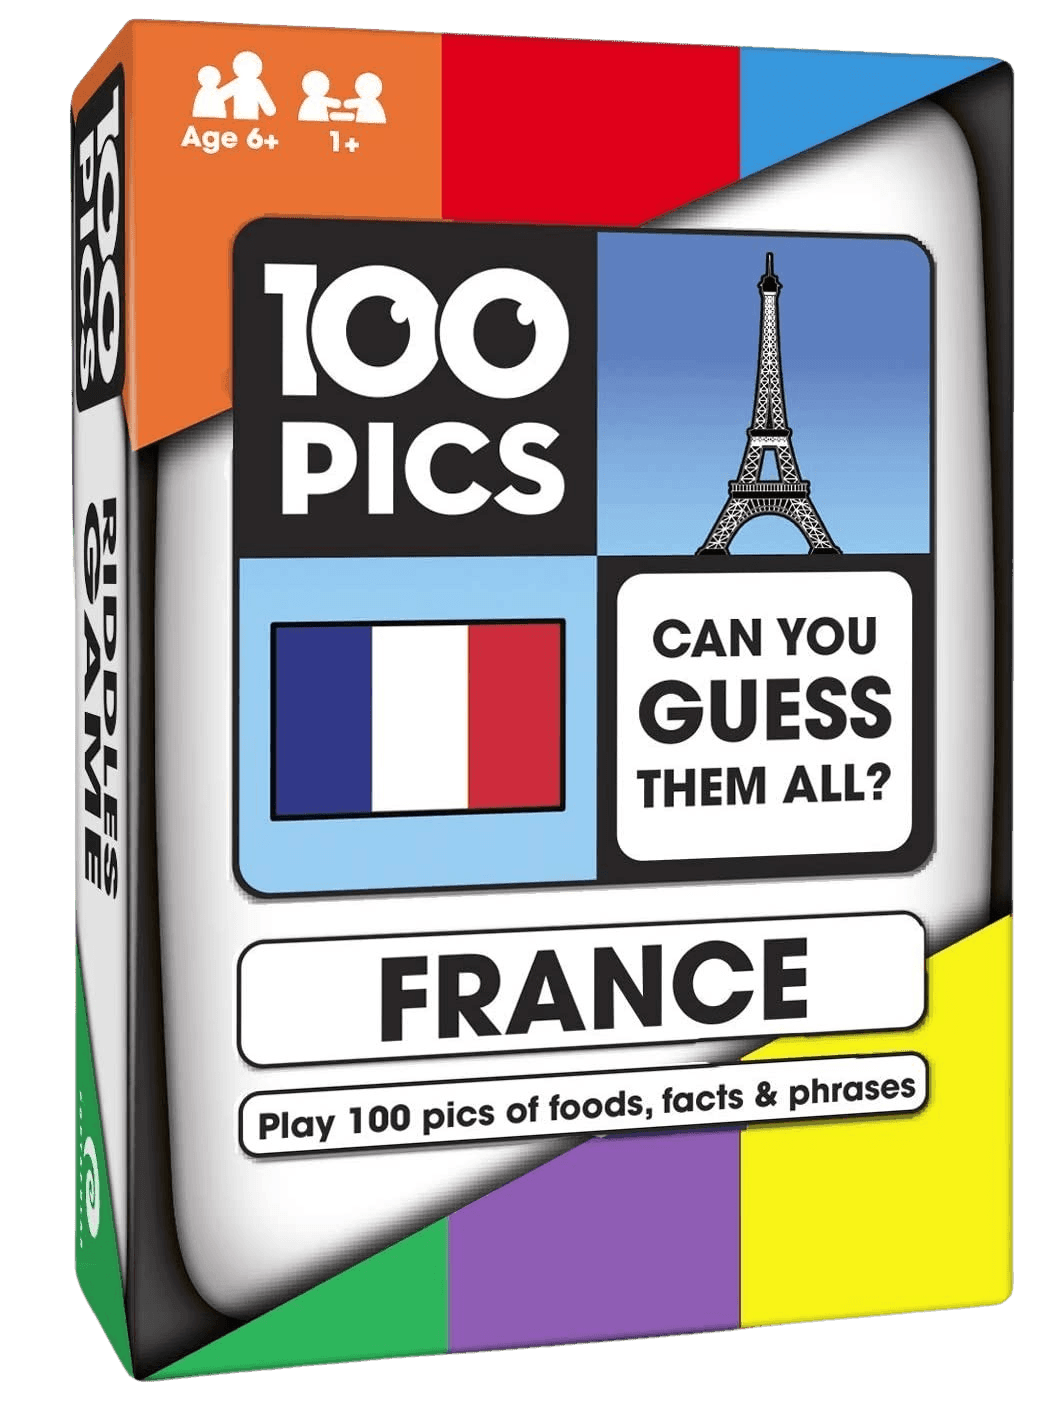 100 PICS - France - The Card Vault